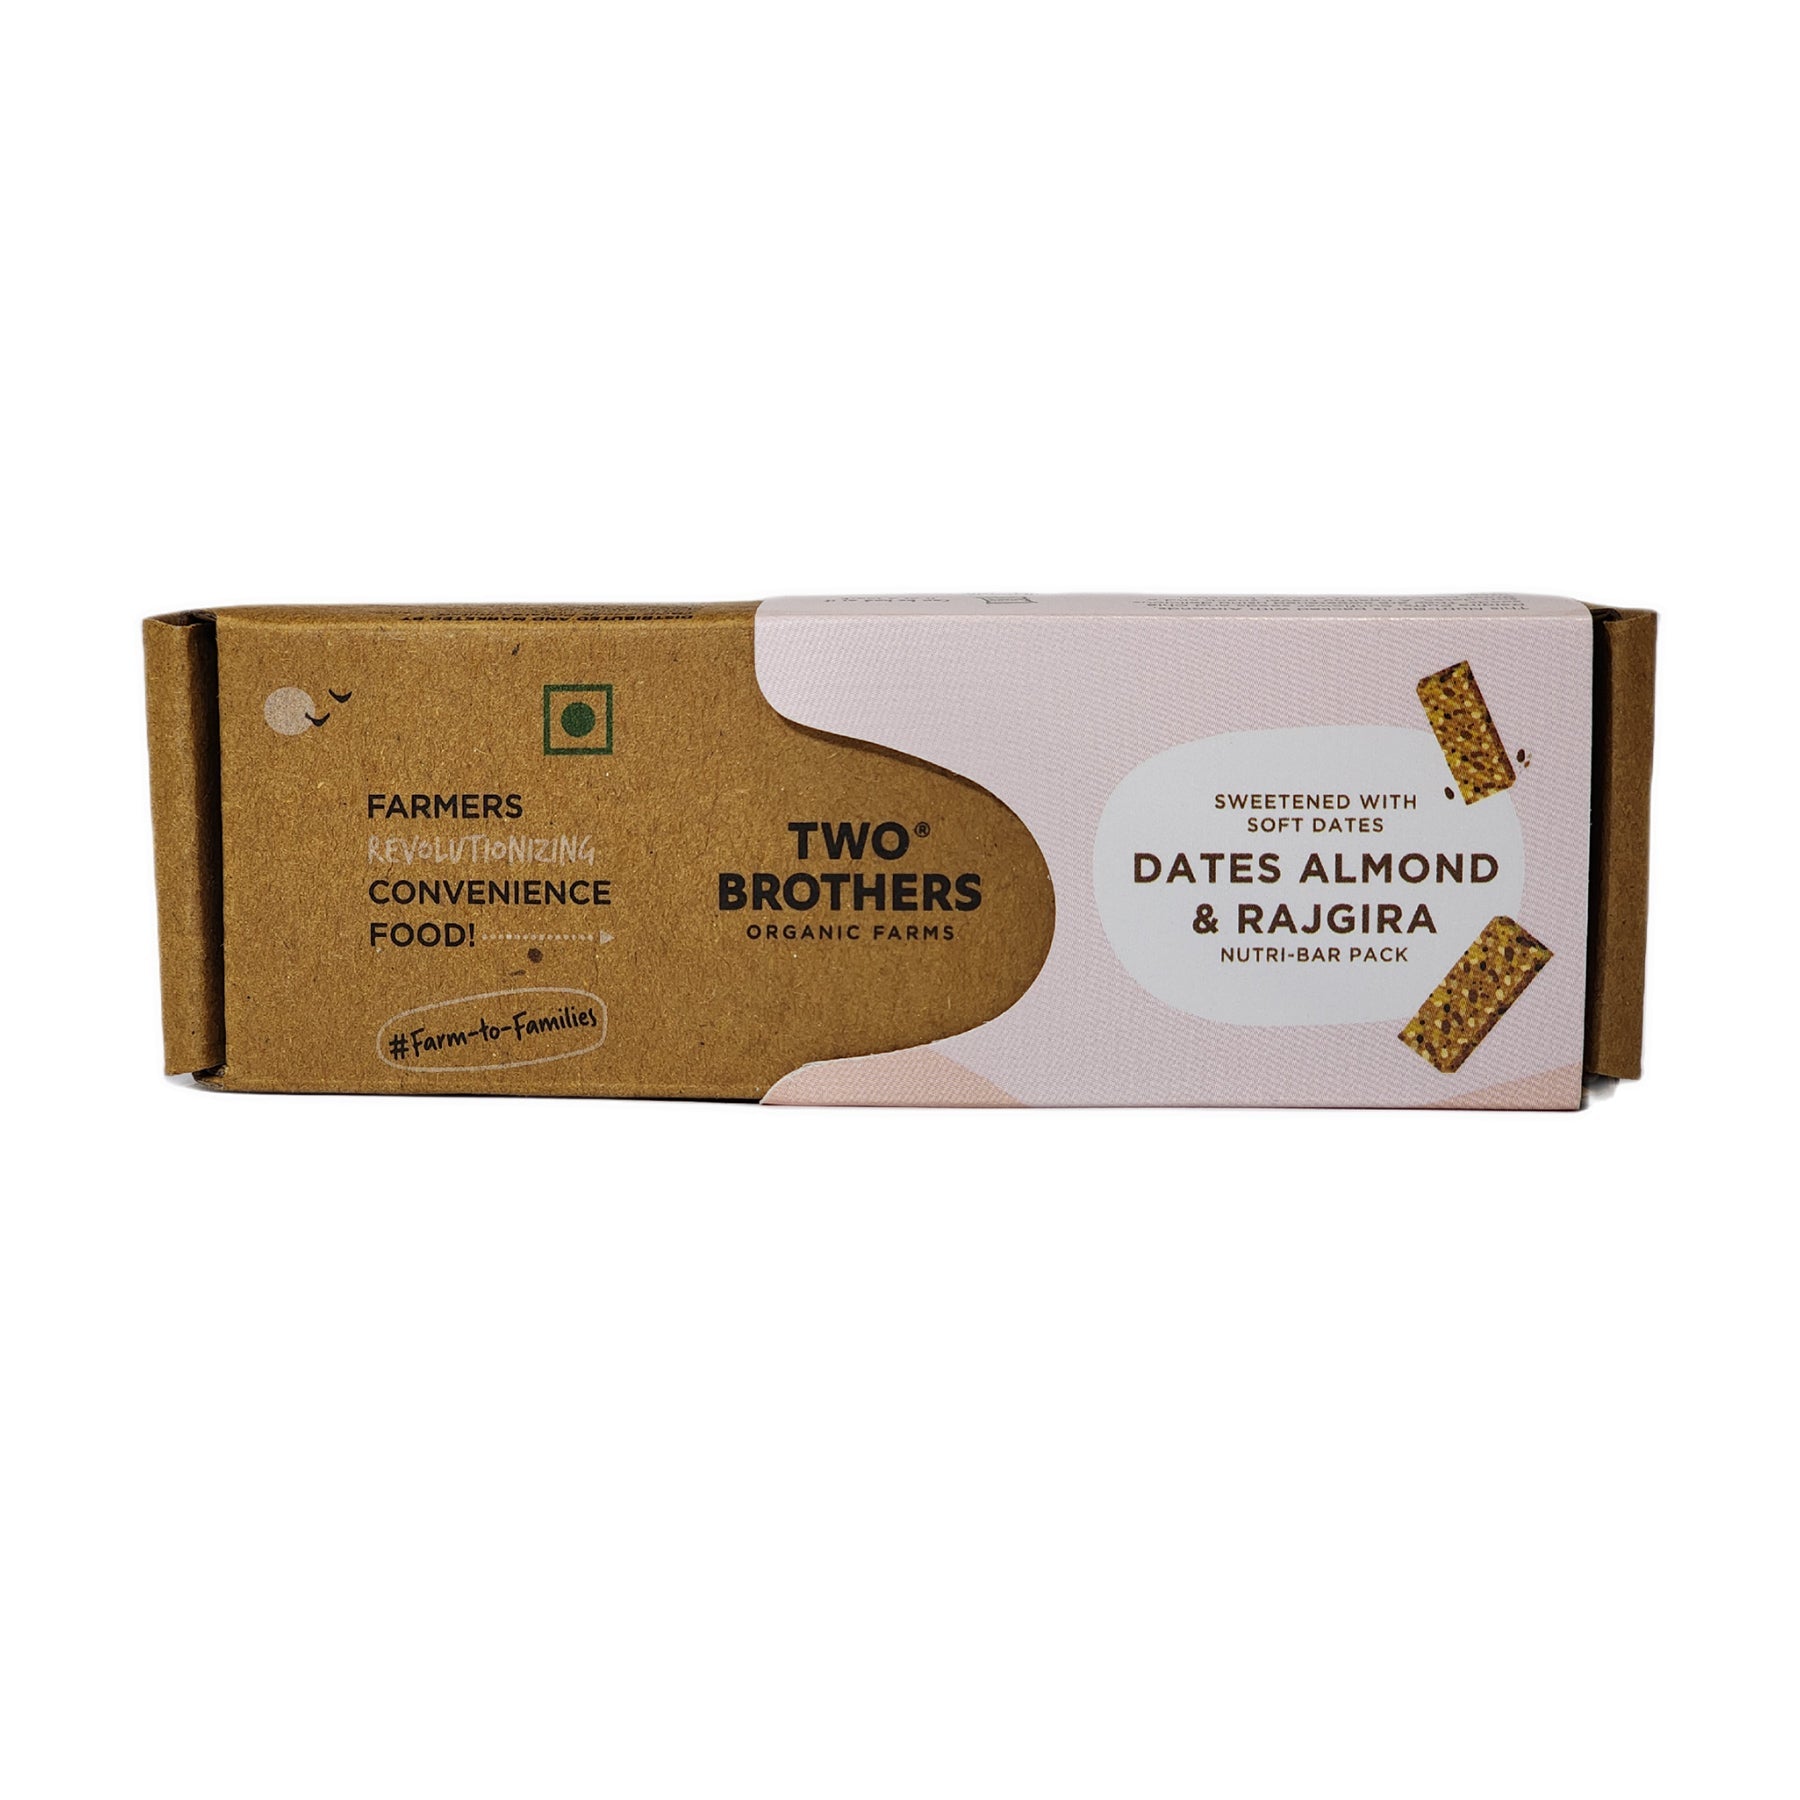 Dates Almond & Rajgira Nutri bar Pack - 3 - 9 bars